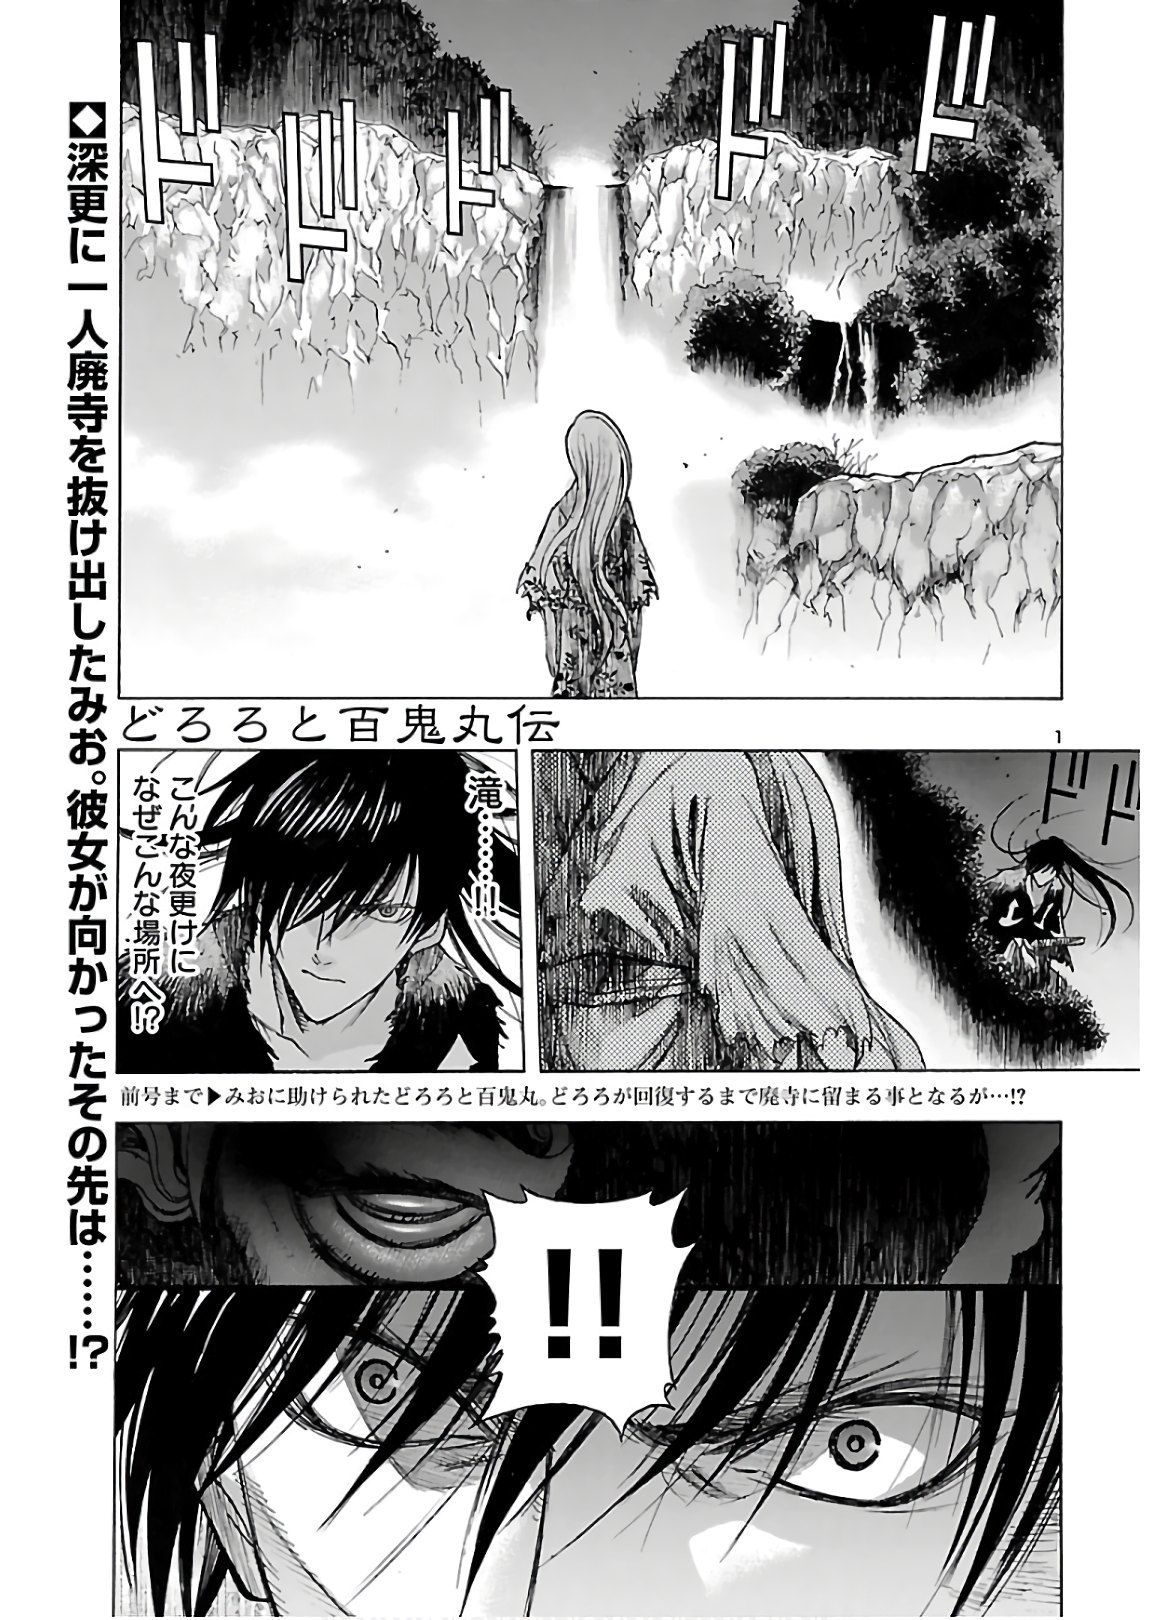 Manga: Dororo Re:Verse Chapter - 18-eng-li